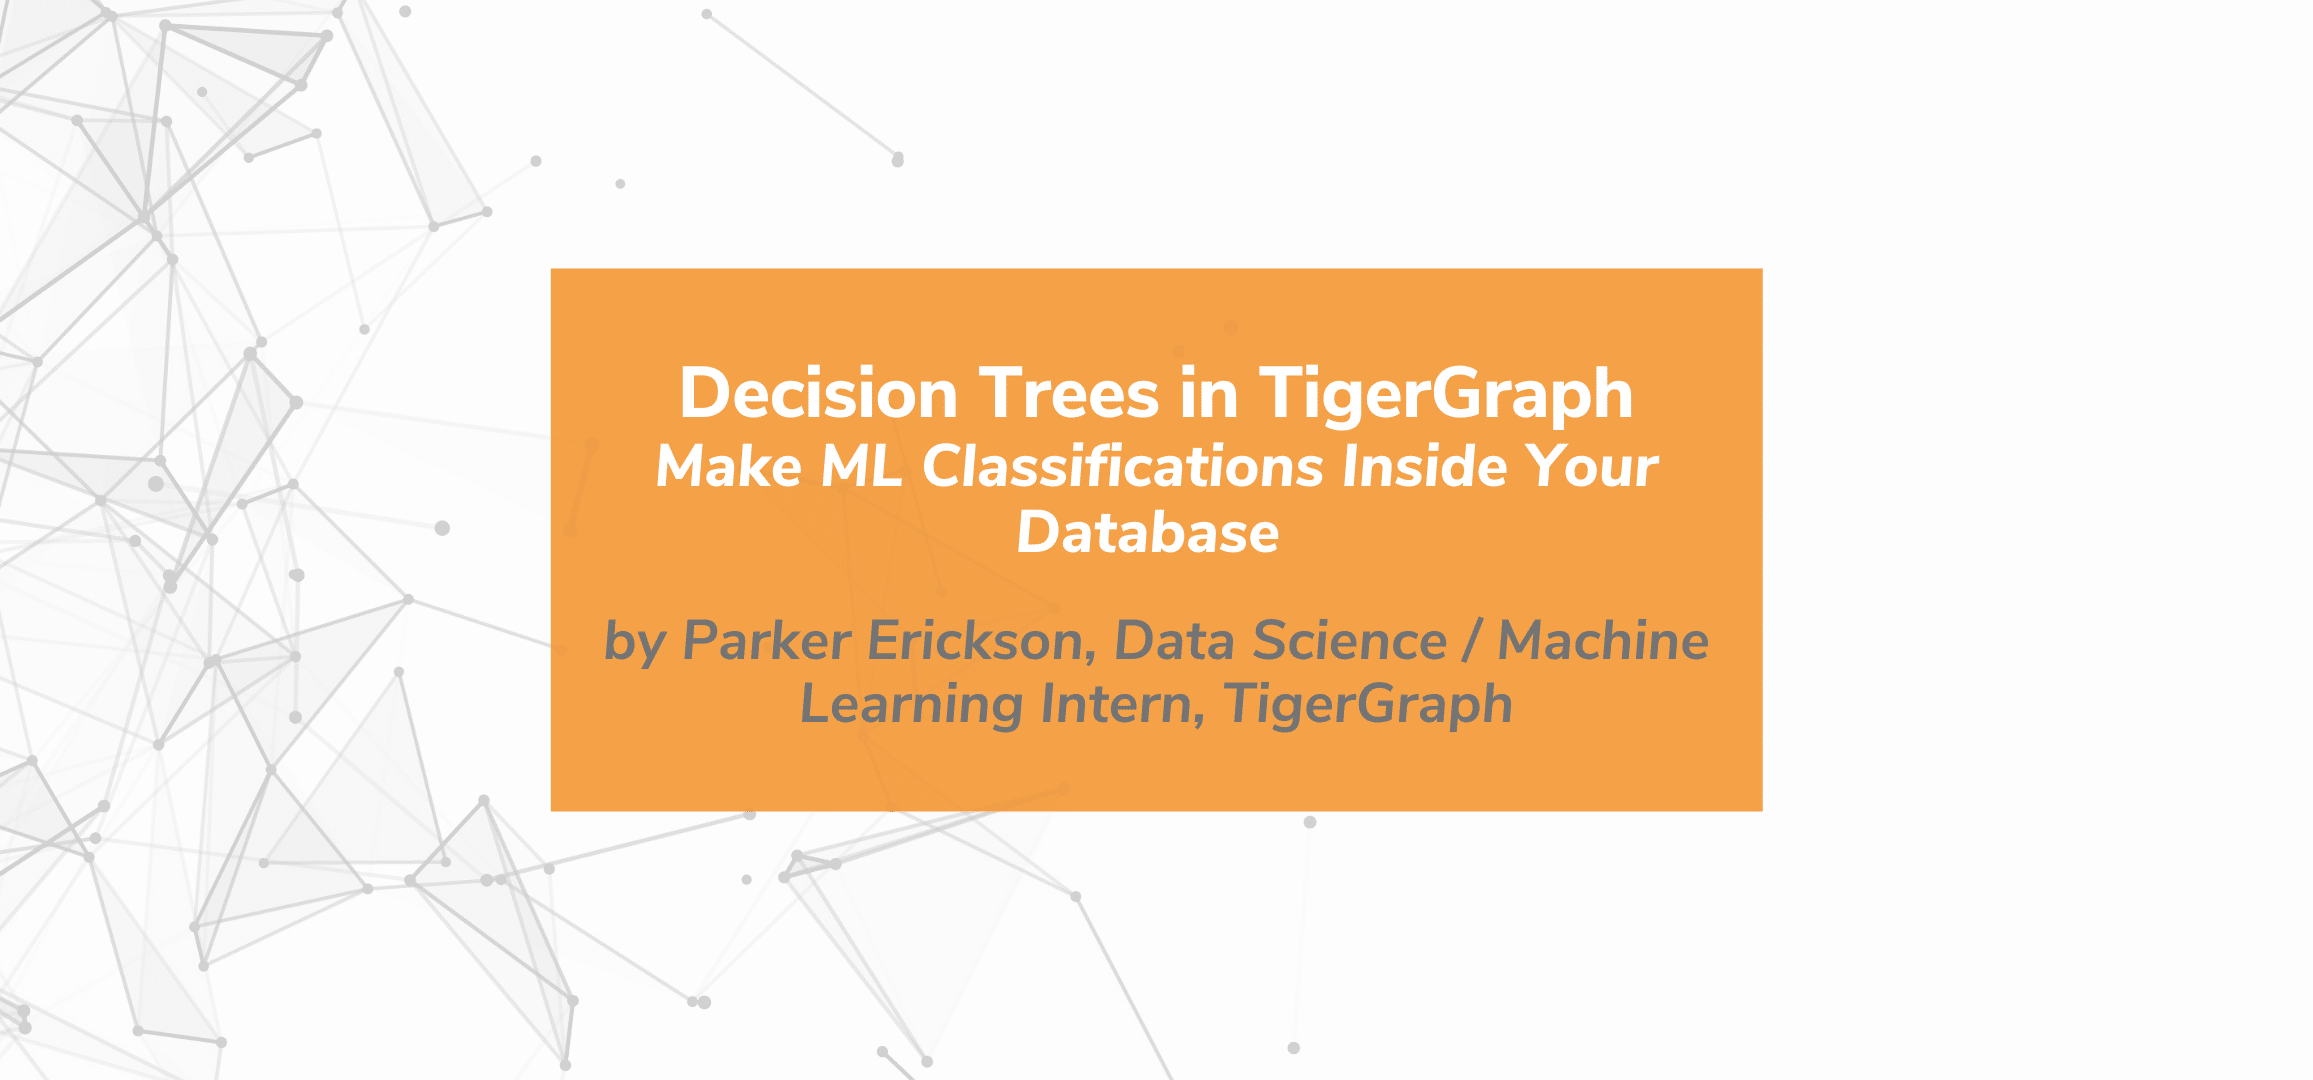 Decision Trees in TigerGraph